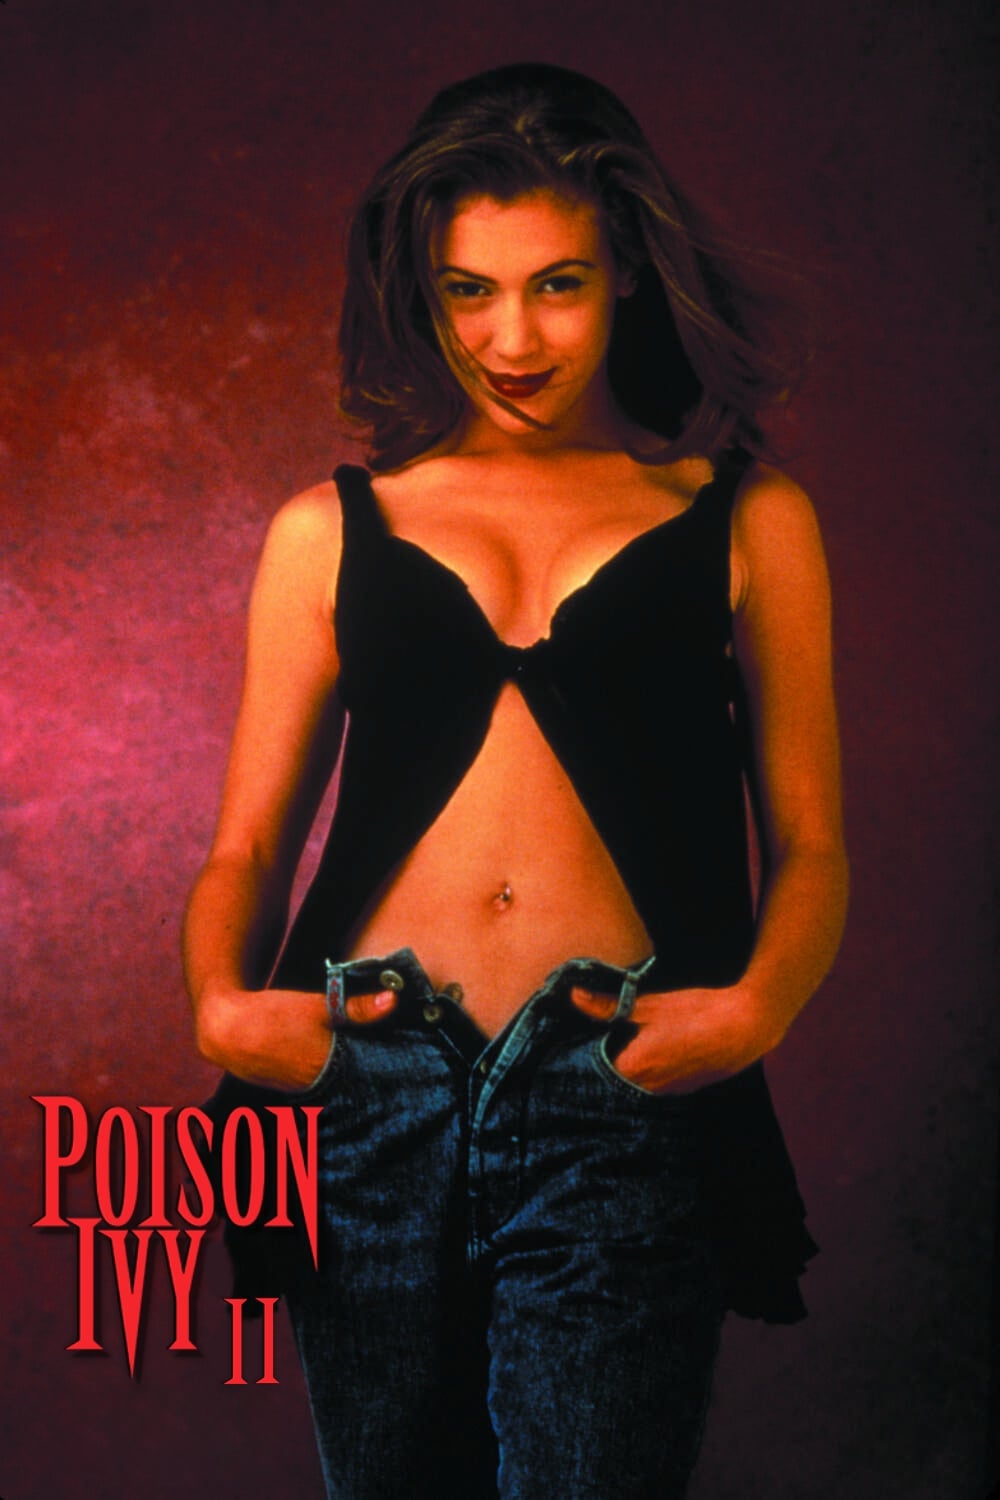 movie Poison ivy 2 full